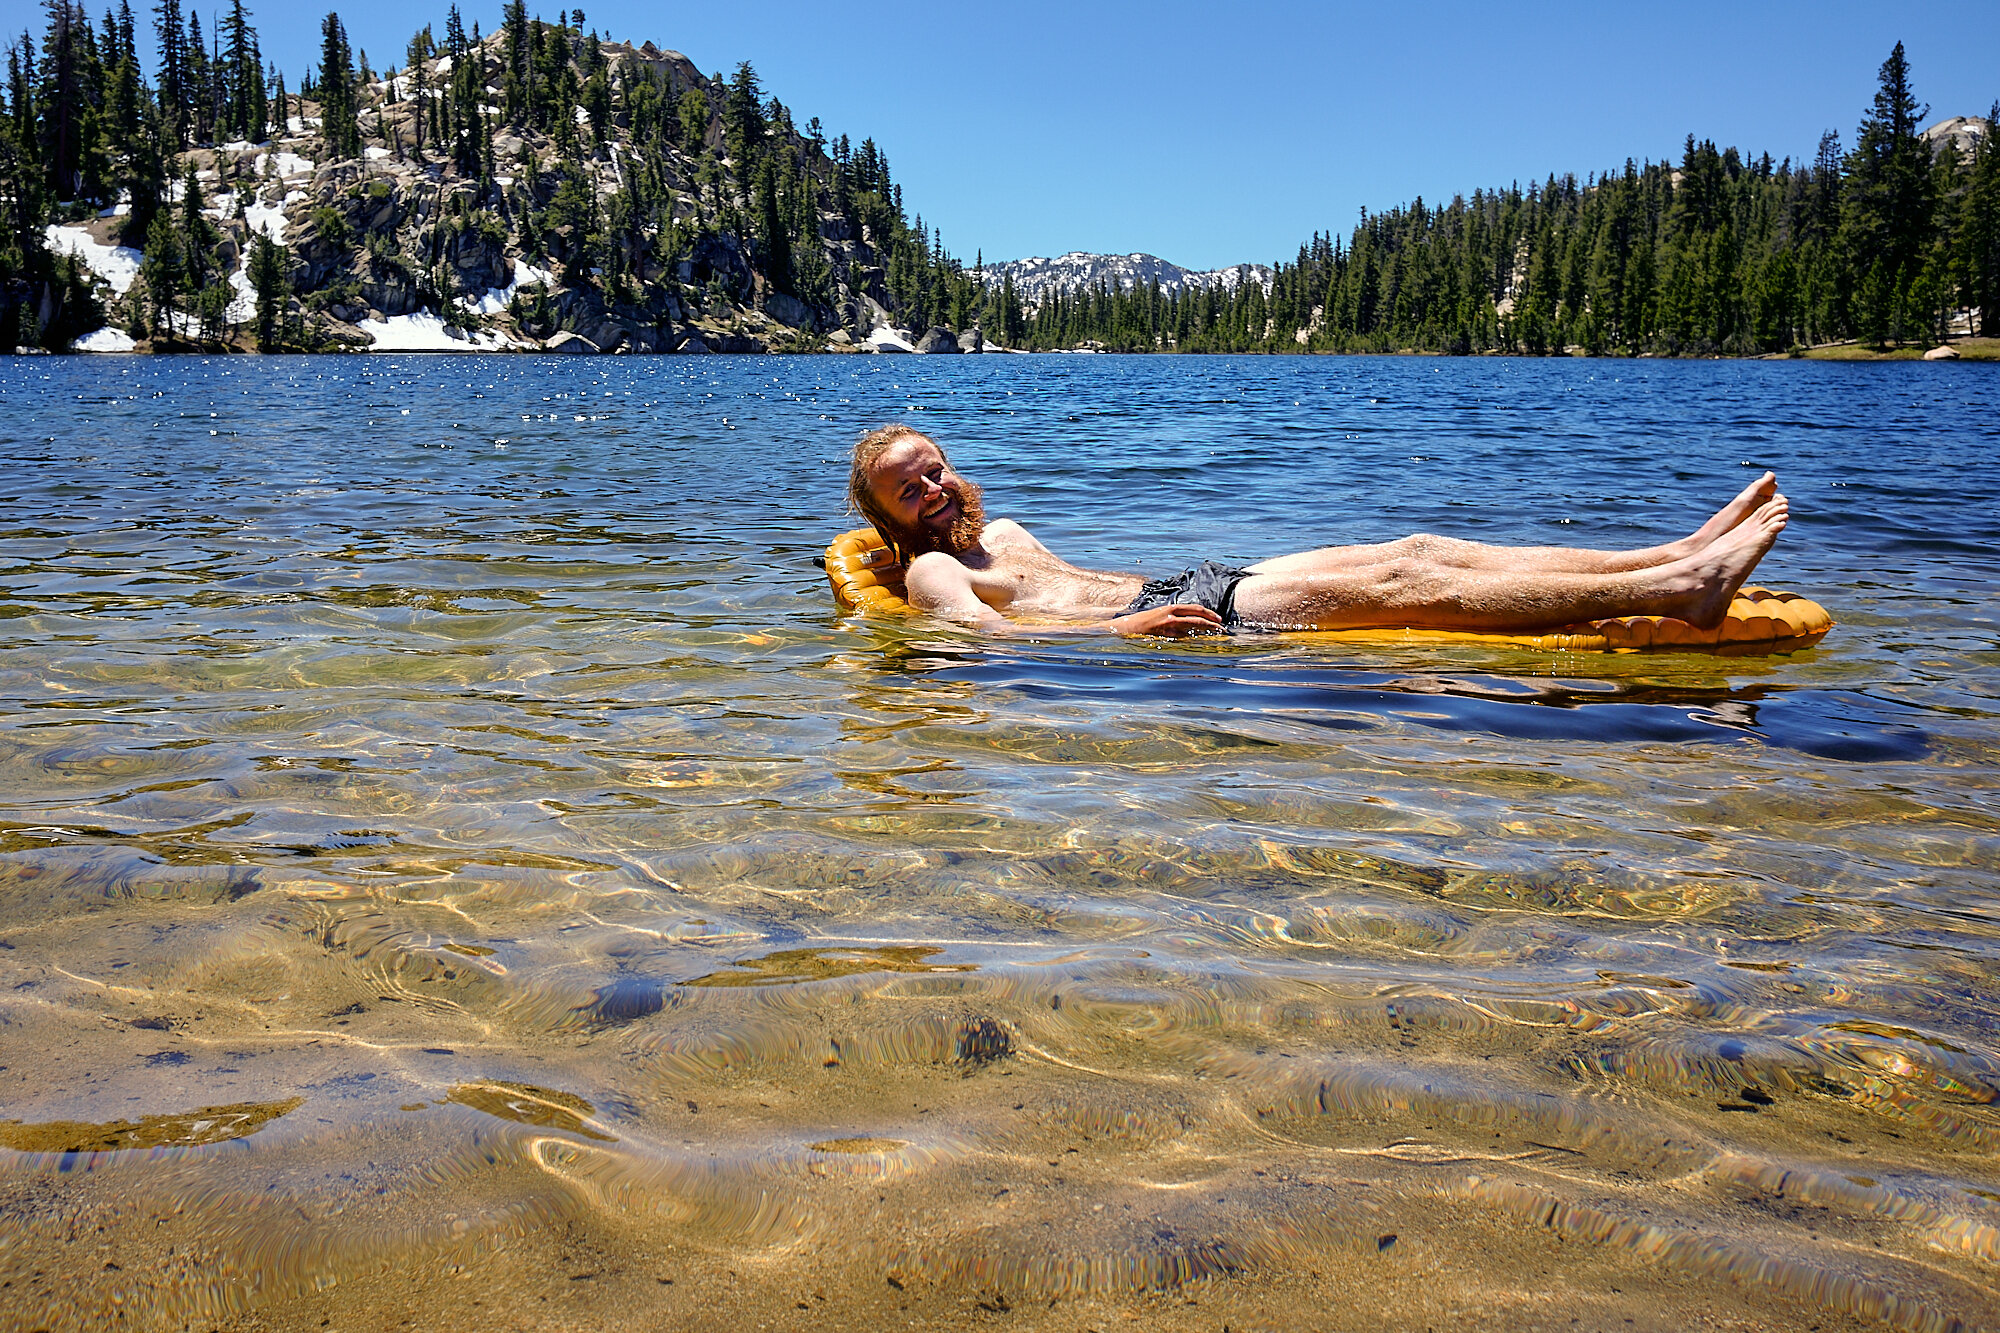  Lebowski enjoys Miller Lake from the comfort of his sleeping pad. | 7/11/19 Mile 959.8, 9,486' 